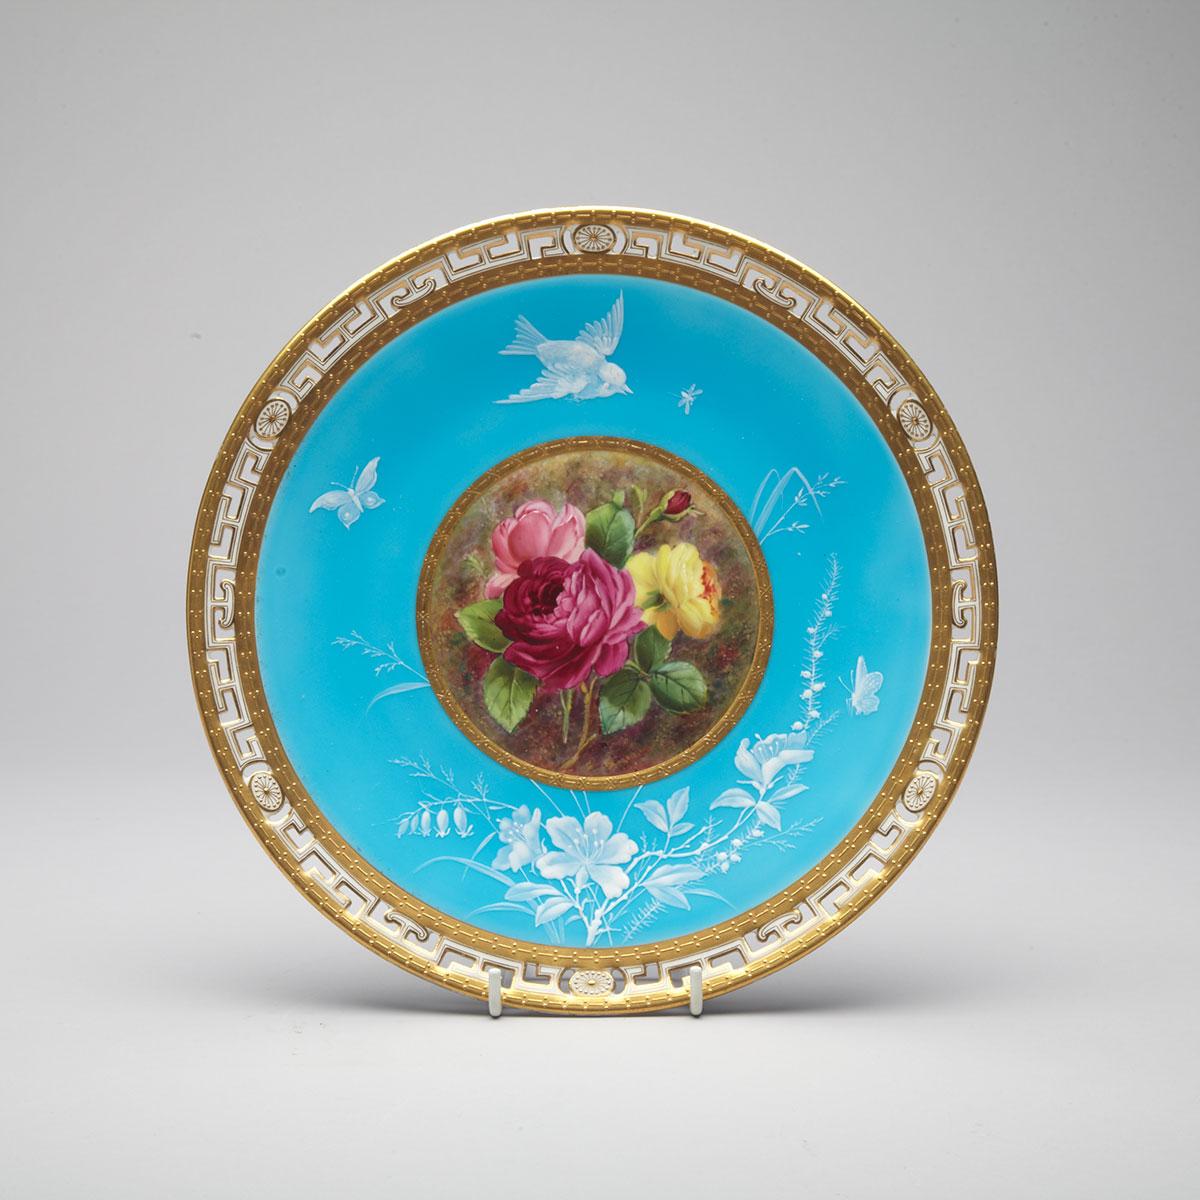 Mintons Pâte-sur-Pâte Turquoise Ground Reticulated Plate, 1884